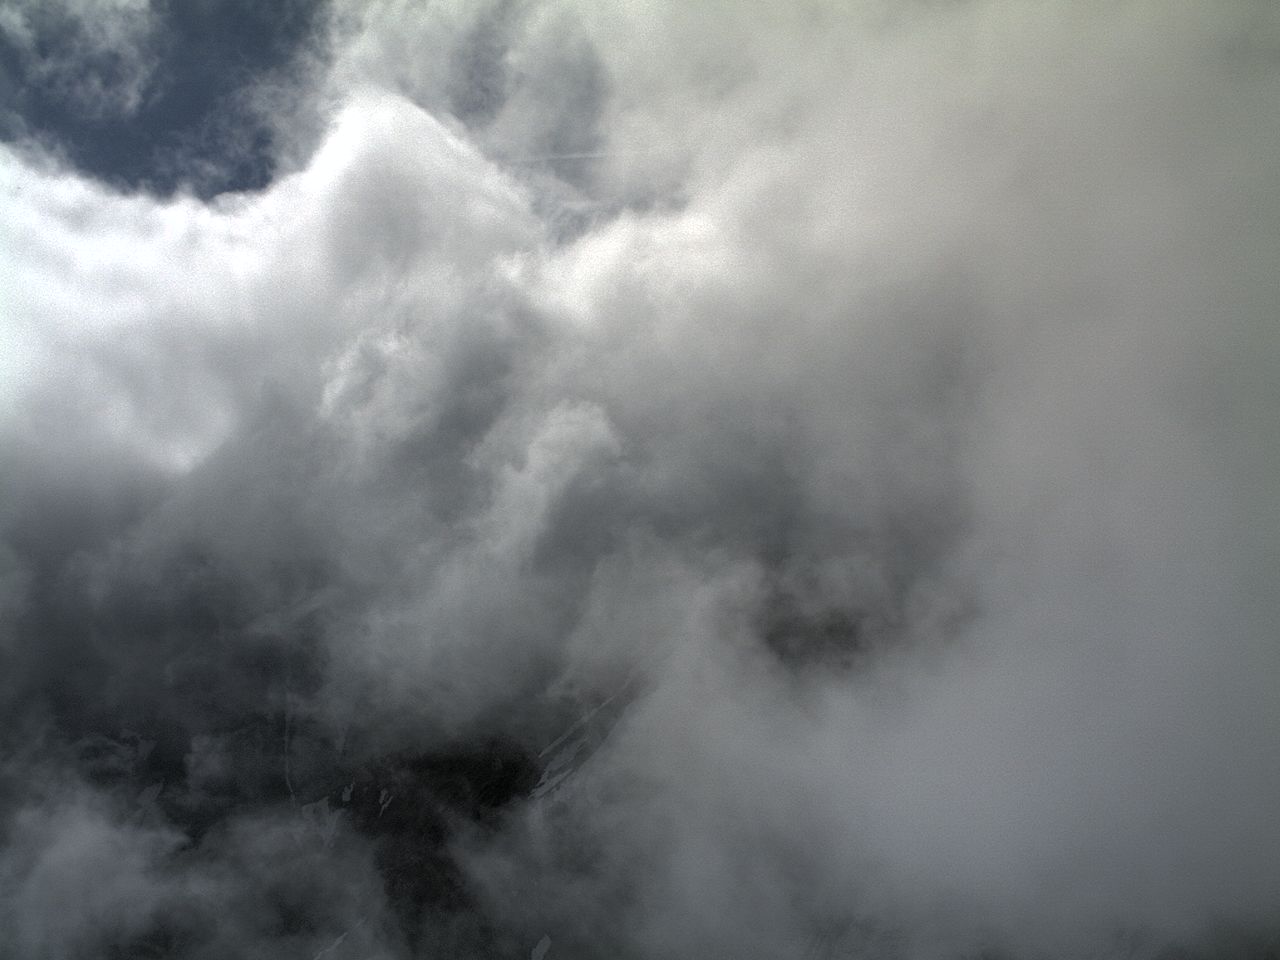 Webcam installata a Punta Helbronner (3462 m), puntata verso il Monte Bianco.